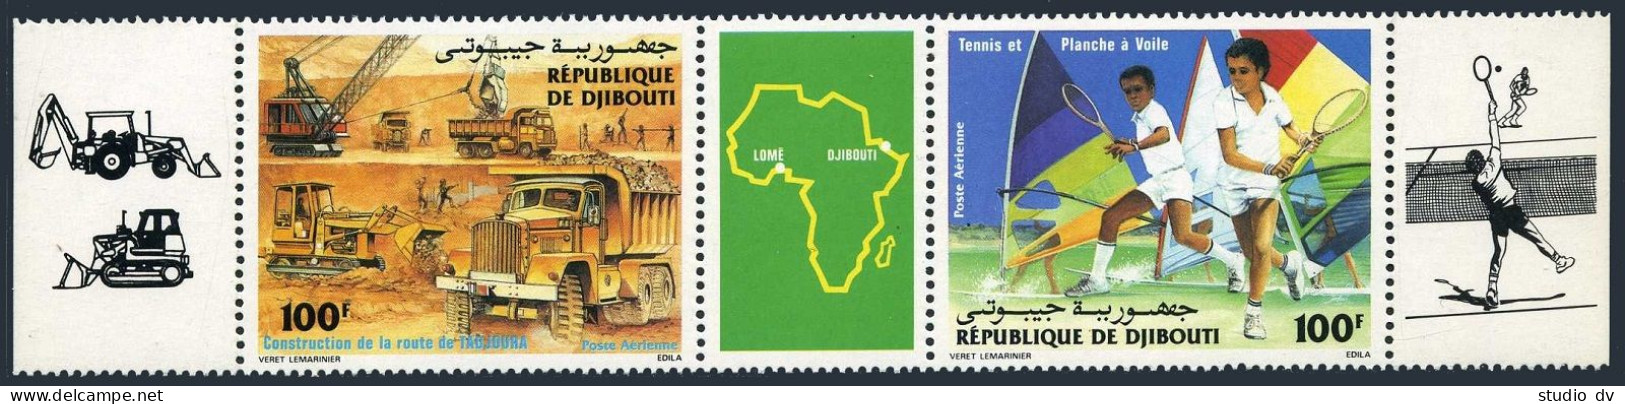 Djibouti C218-C219a Var 2,MNH.Michel 457-458. Windsurfing,Tennis,Highway.1985. - Djibouti (1977-...)